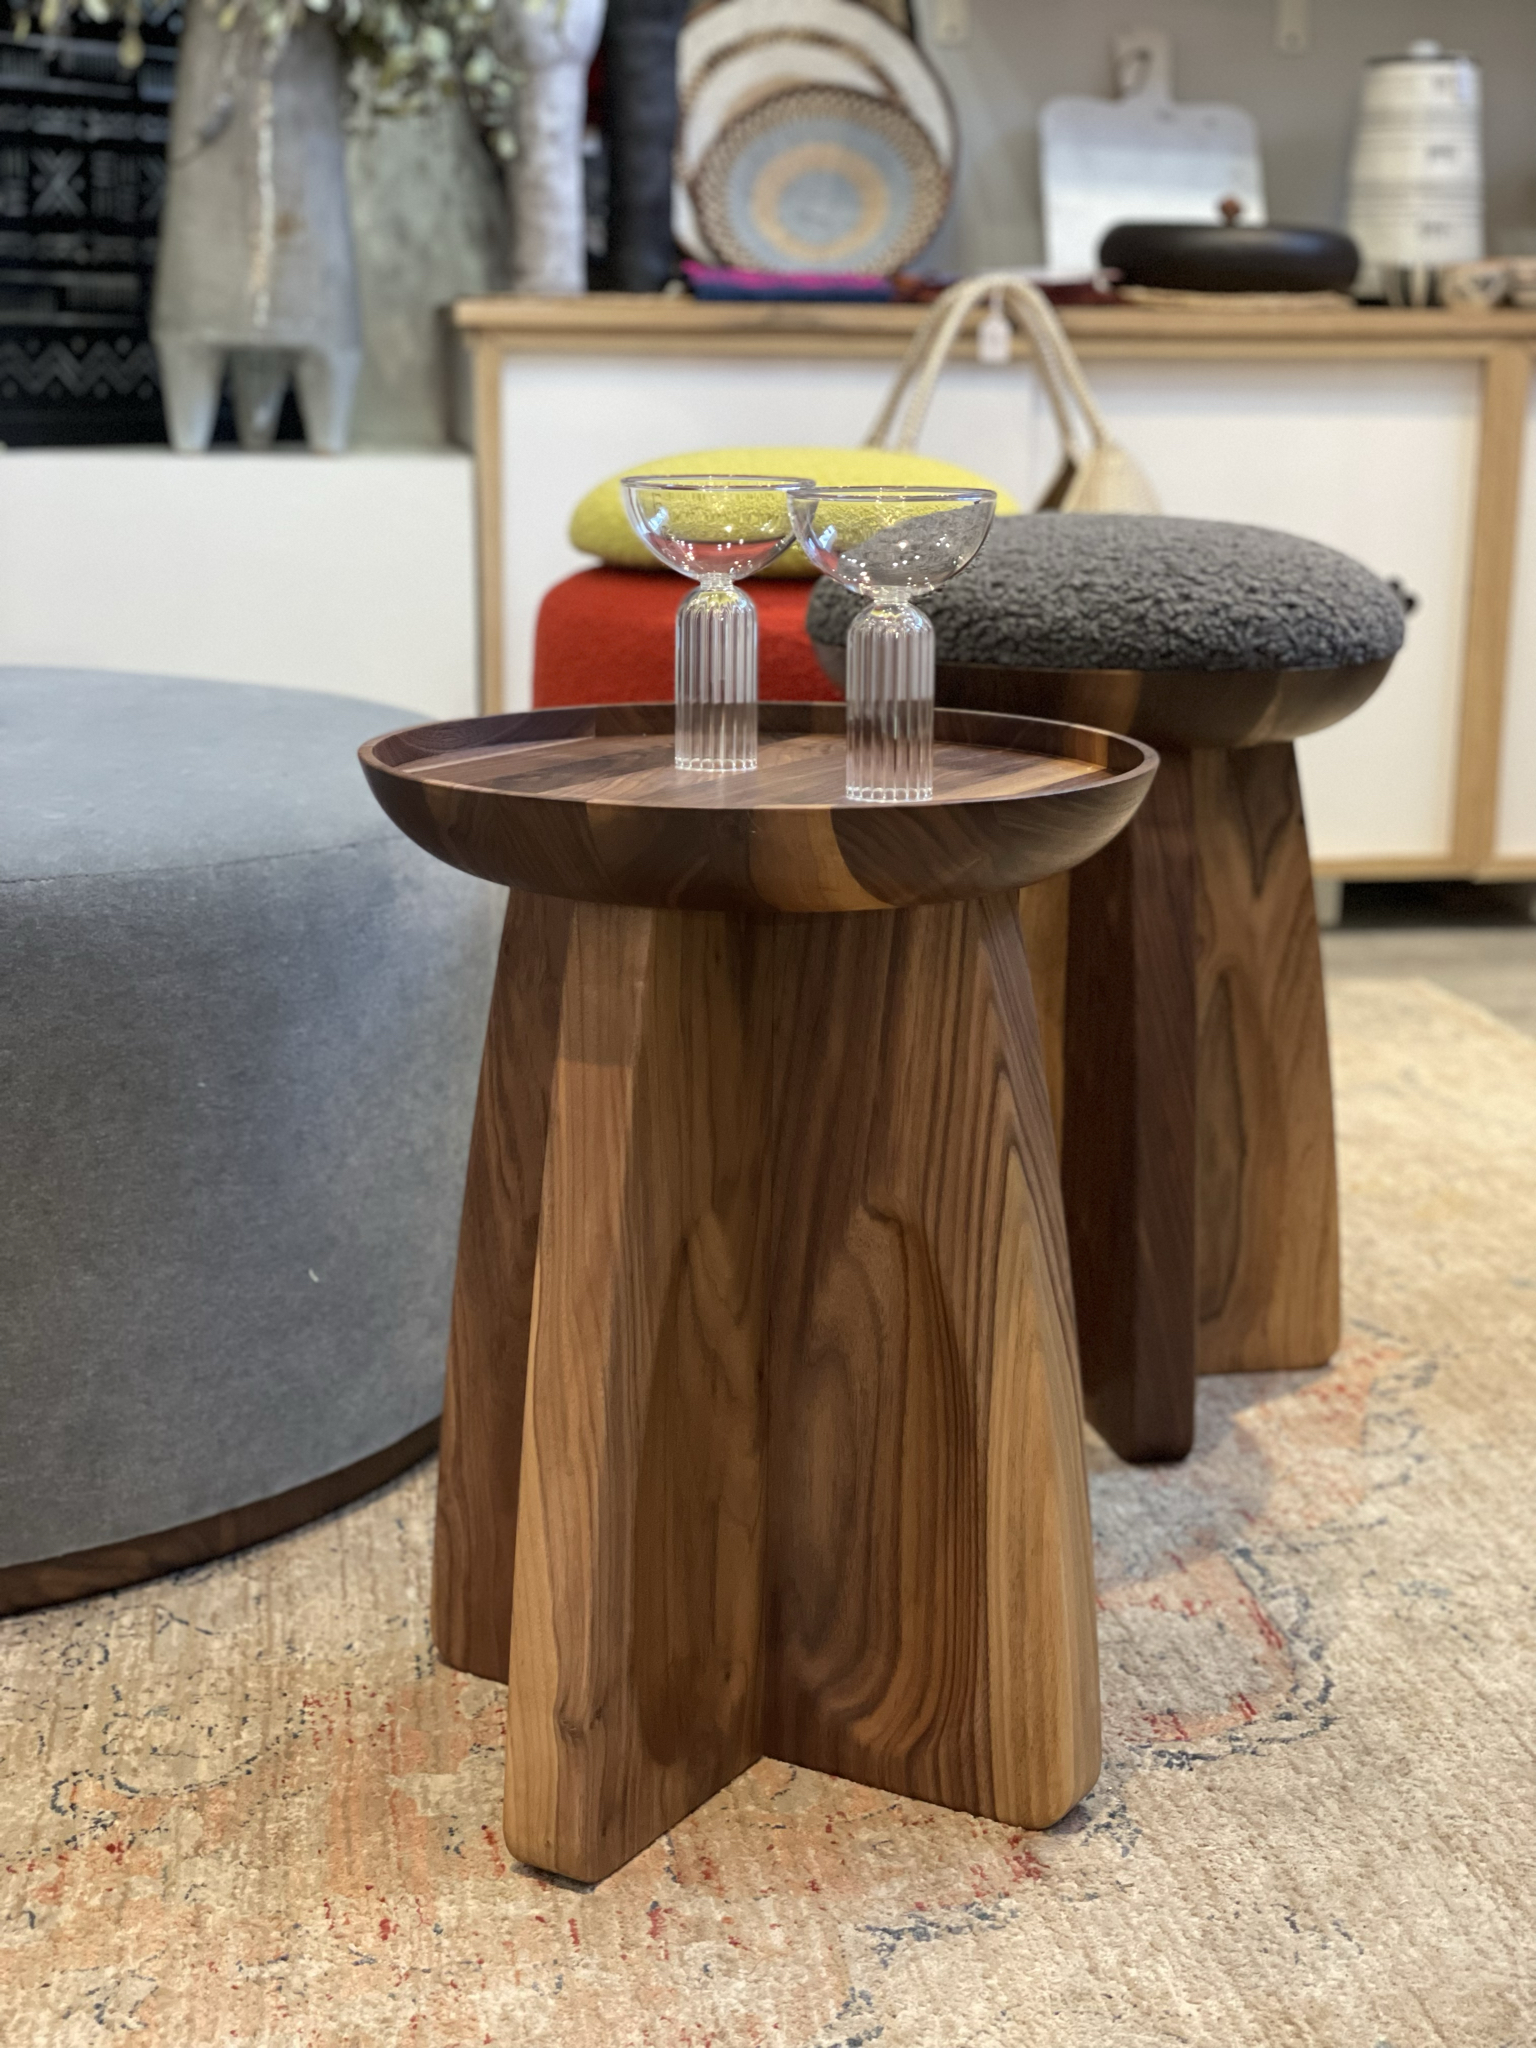 Asé Design Studio’s handmade maple plant stands